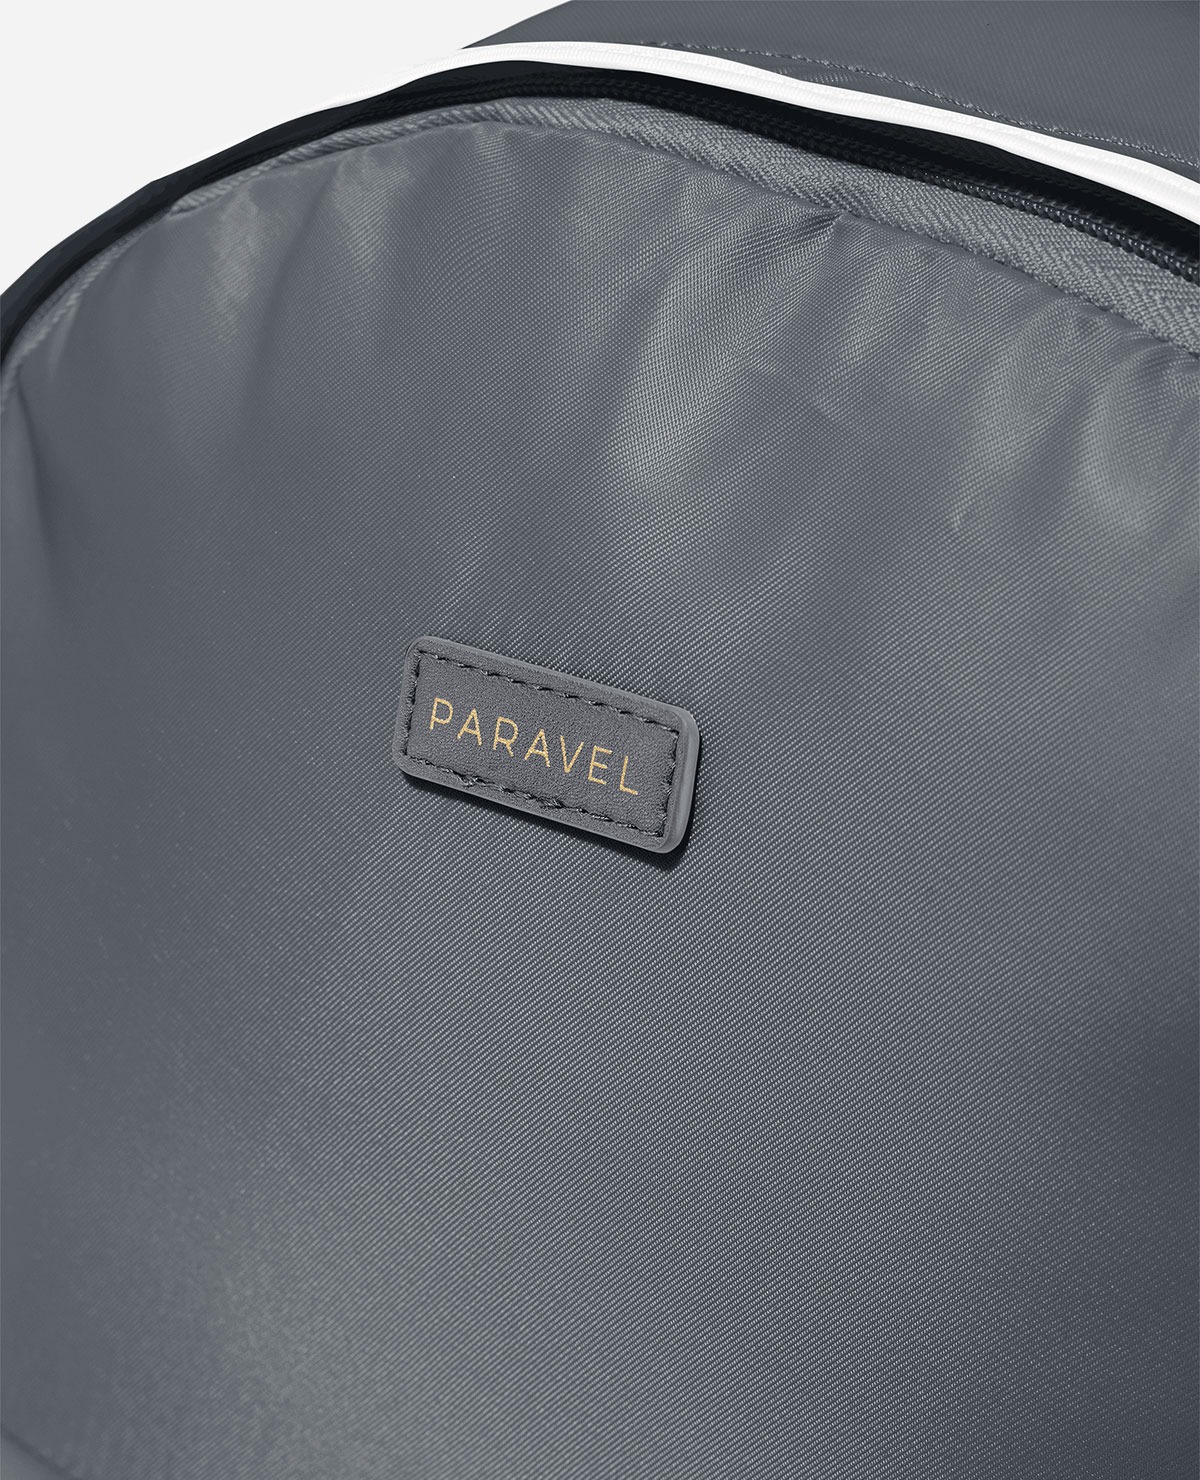 Paravel Foldable Travel Nylon Duffle Bag Bebop Red - New